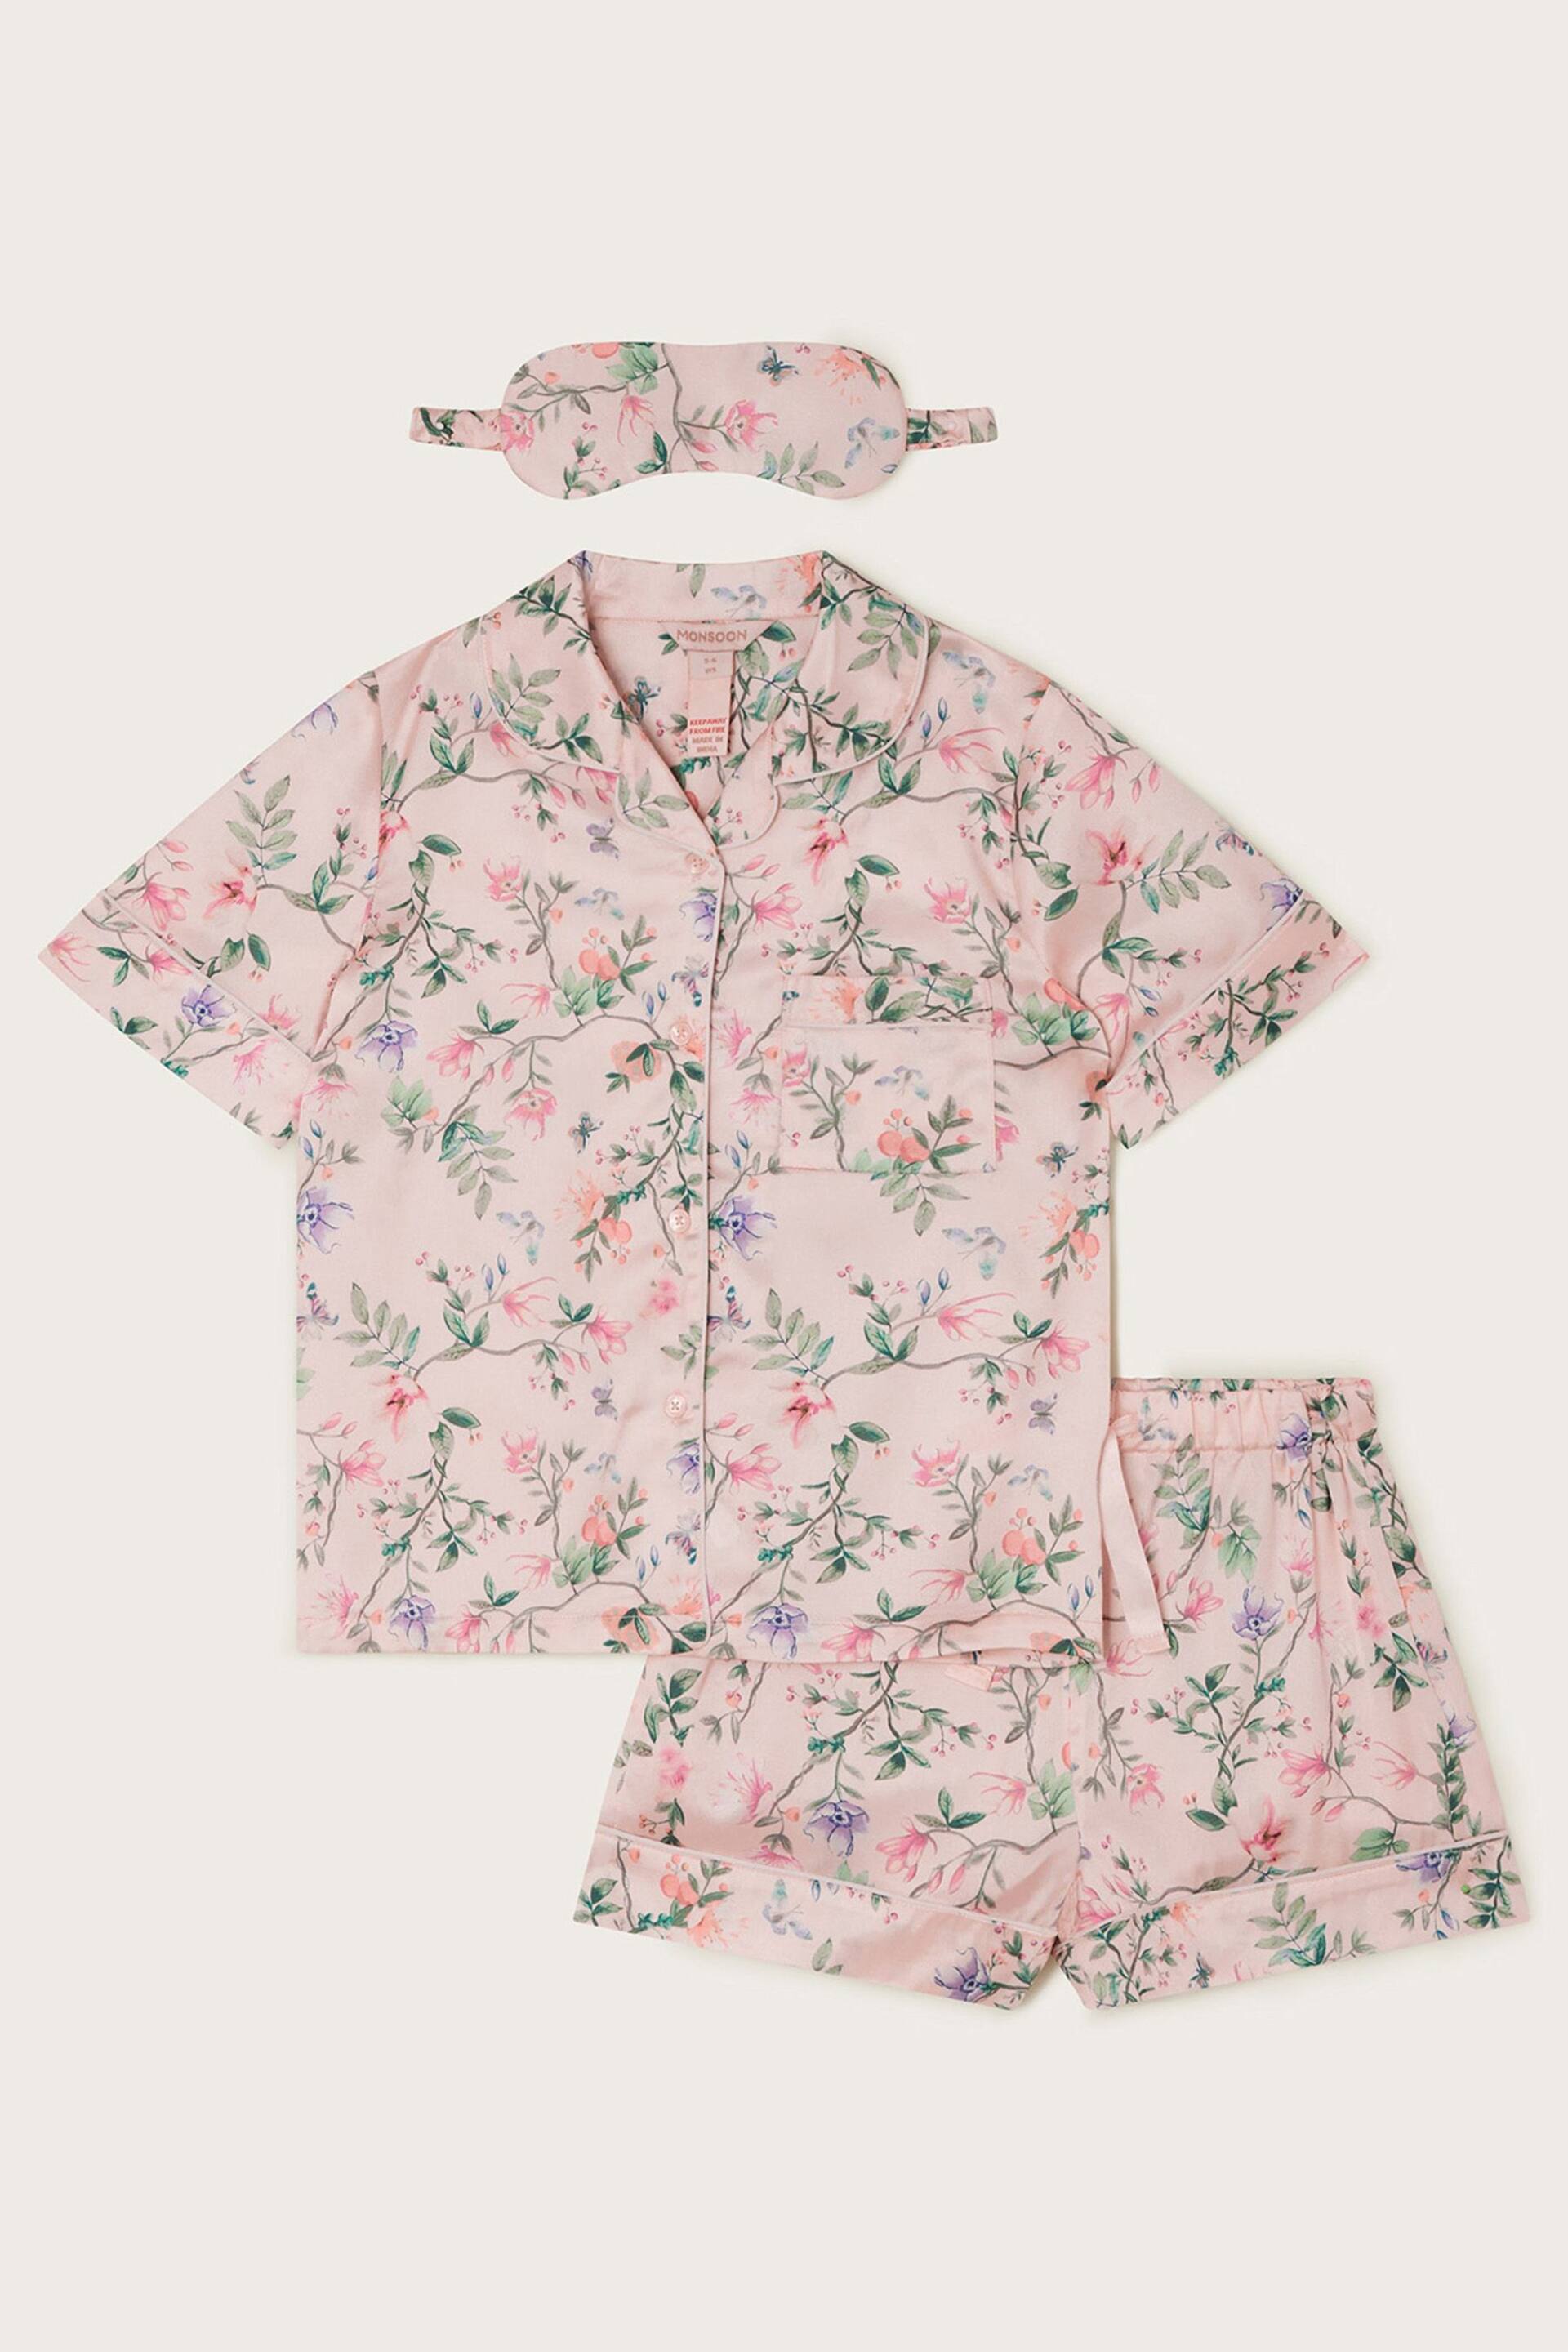 Monsoon Pink Hydrangea Satin Shorts Pyjama Set - Image 1 of 3